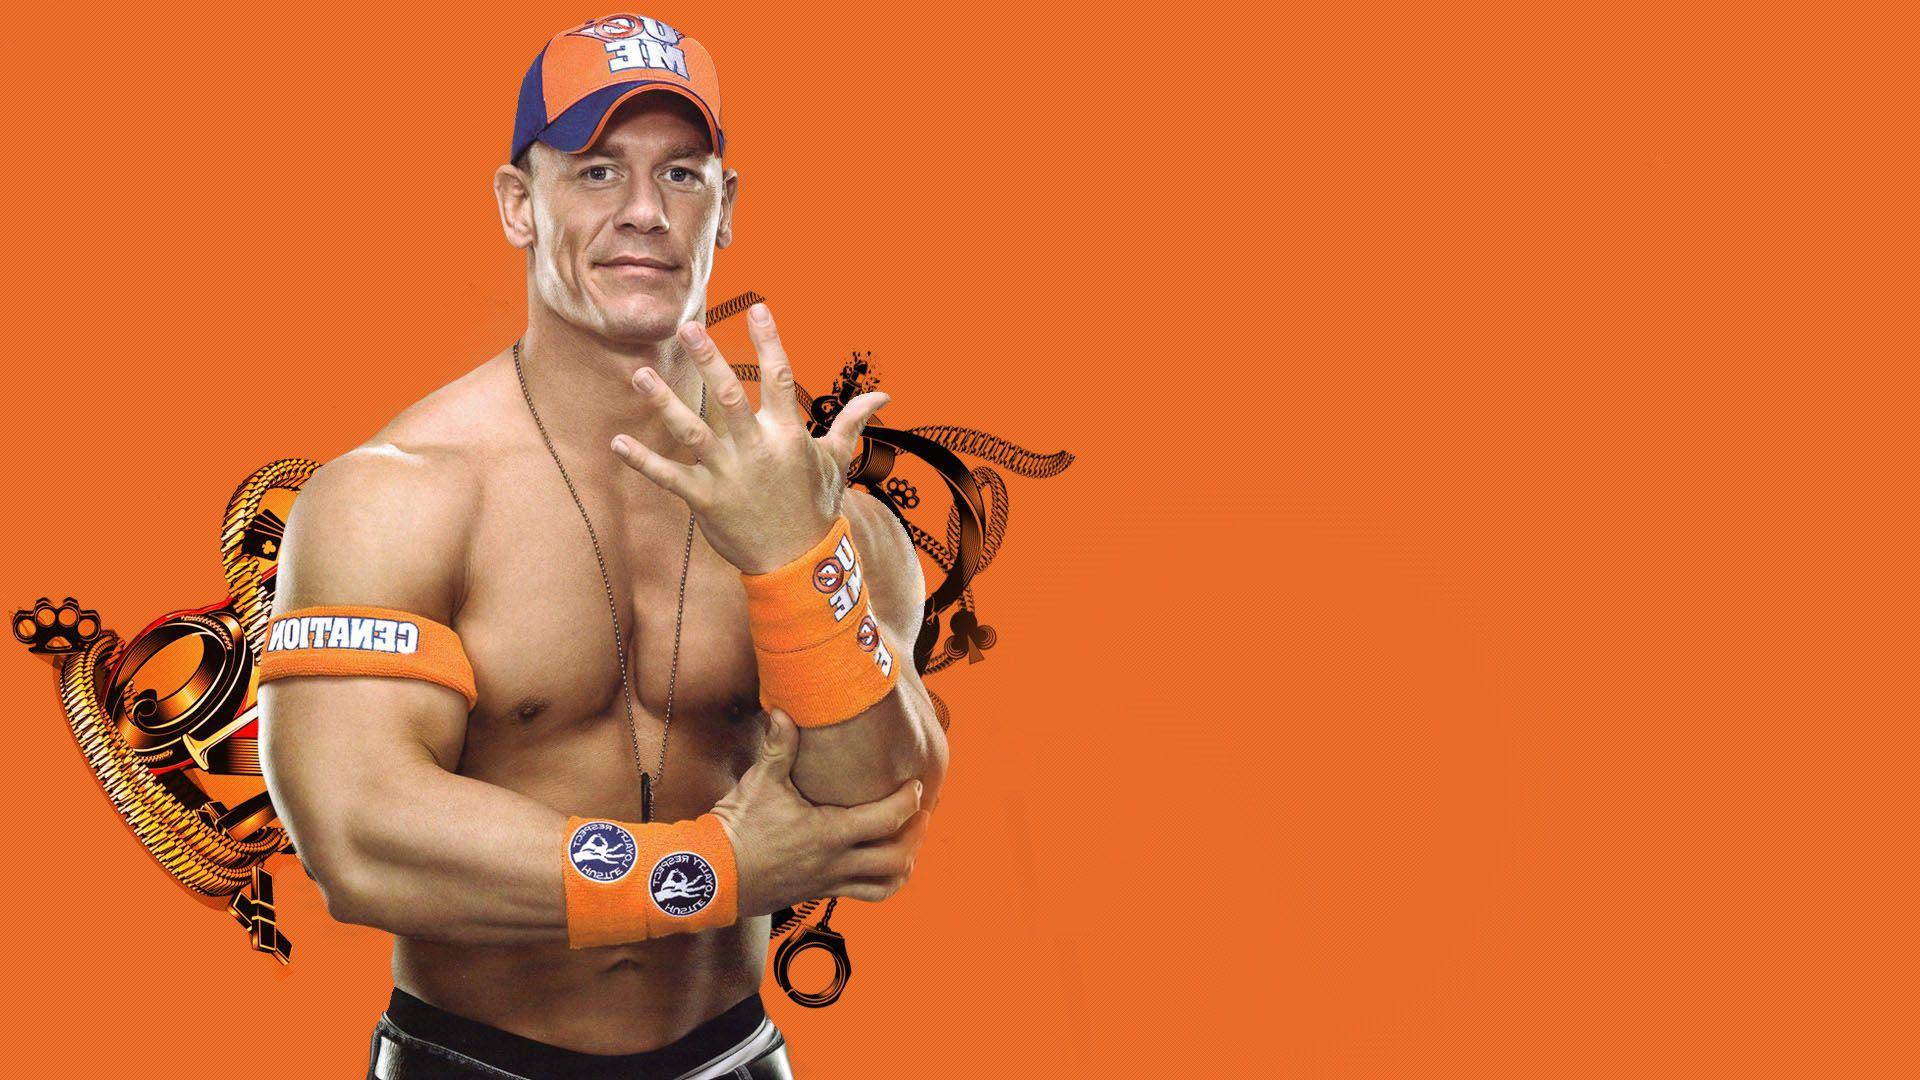 WWE John Cena wallpaper HD free Download 2016